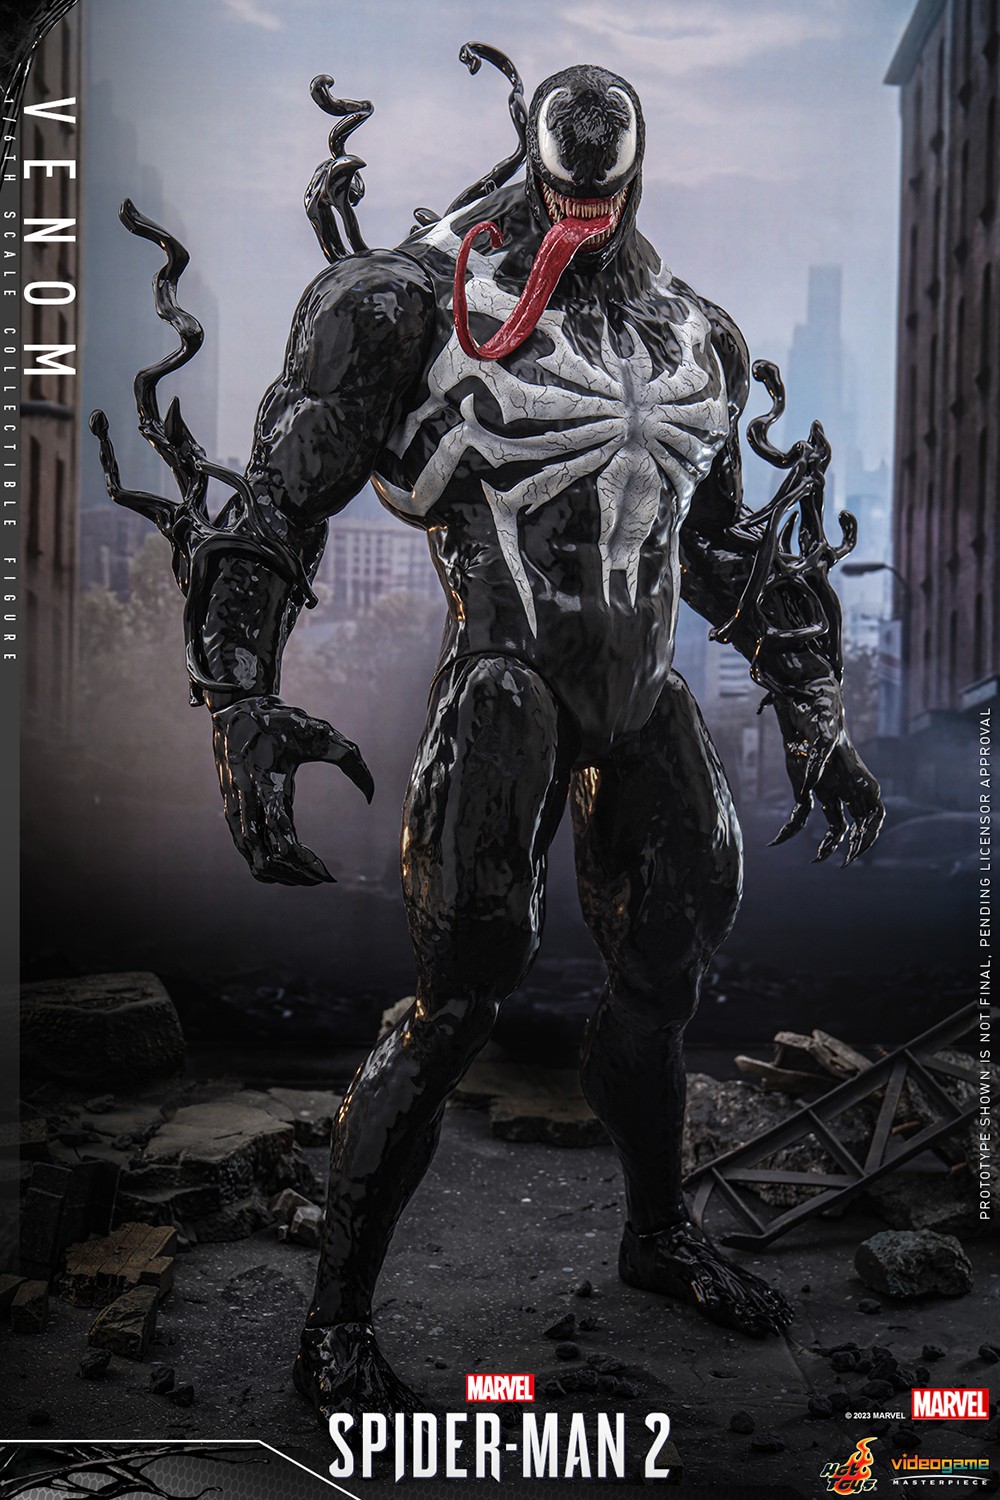 Marvel's Spider-Man 2 VGM59 Venom 1/6th Scale Collectible Figure